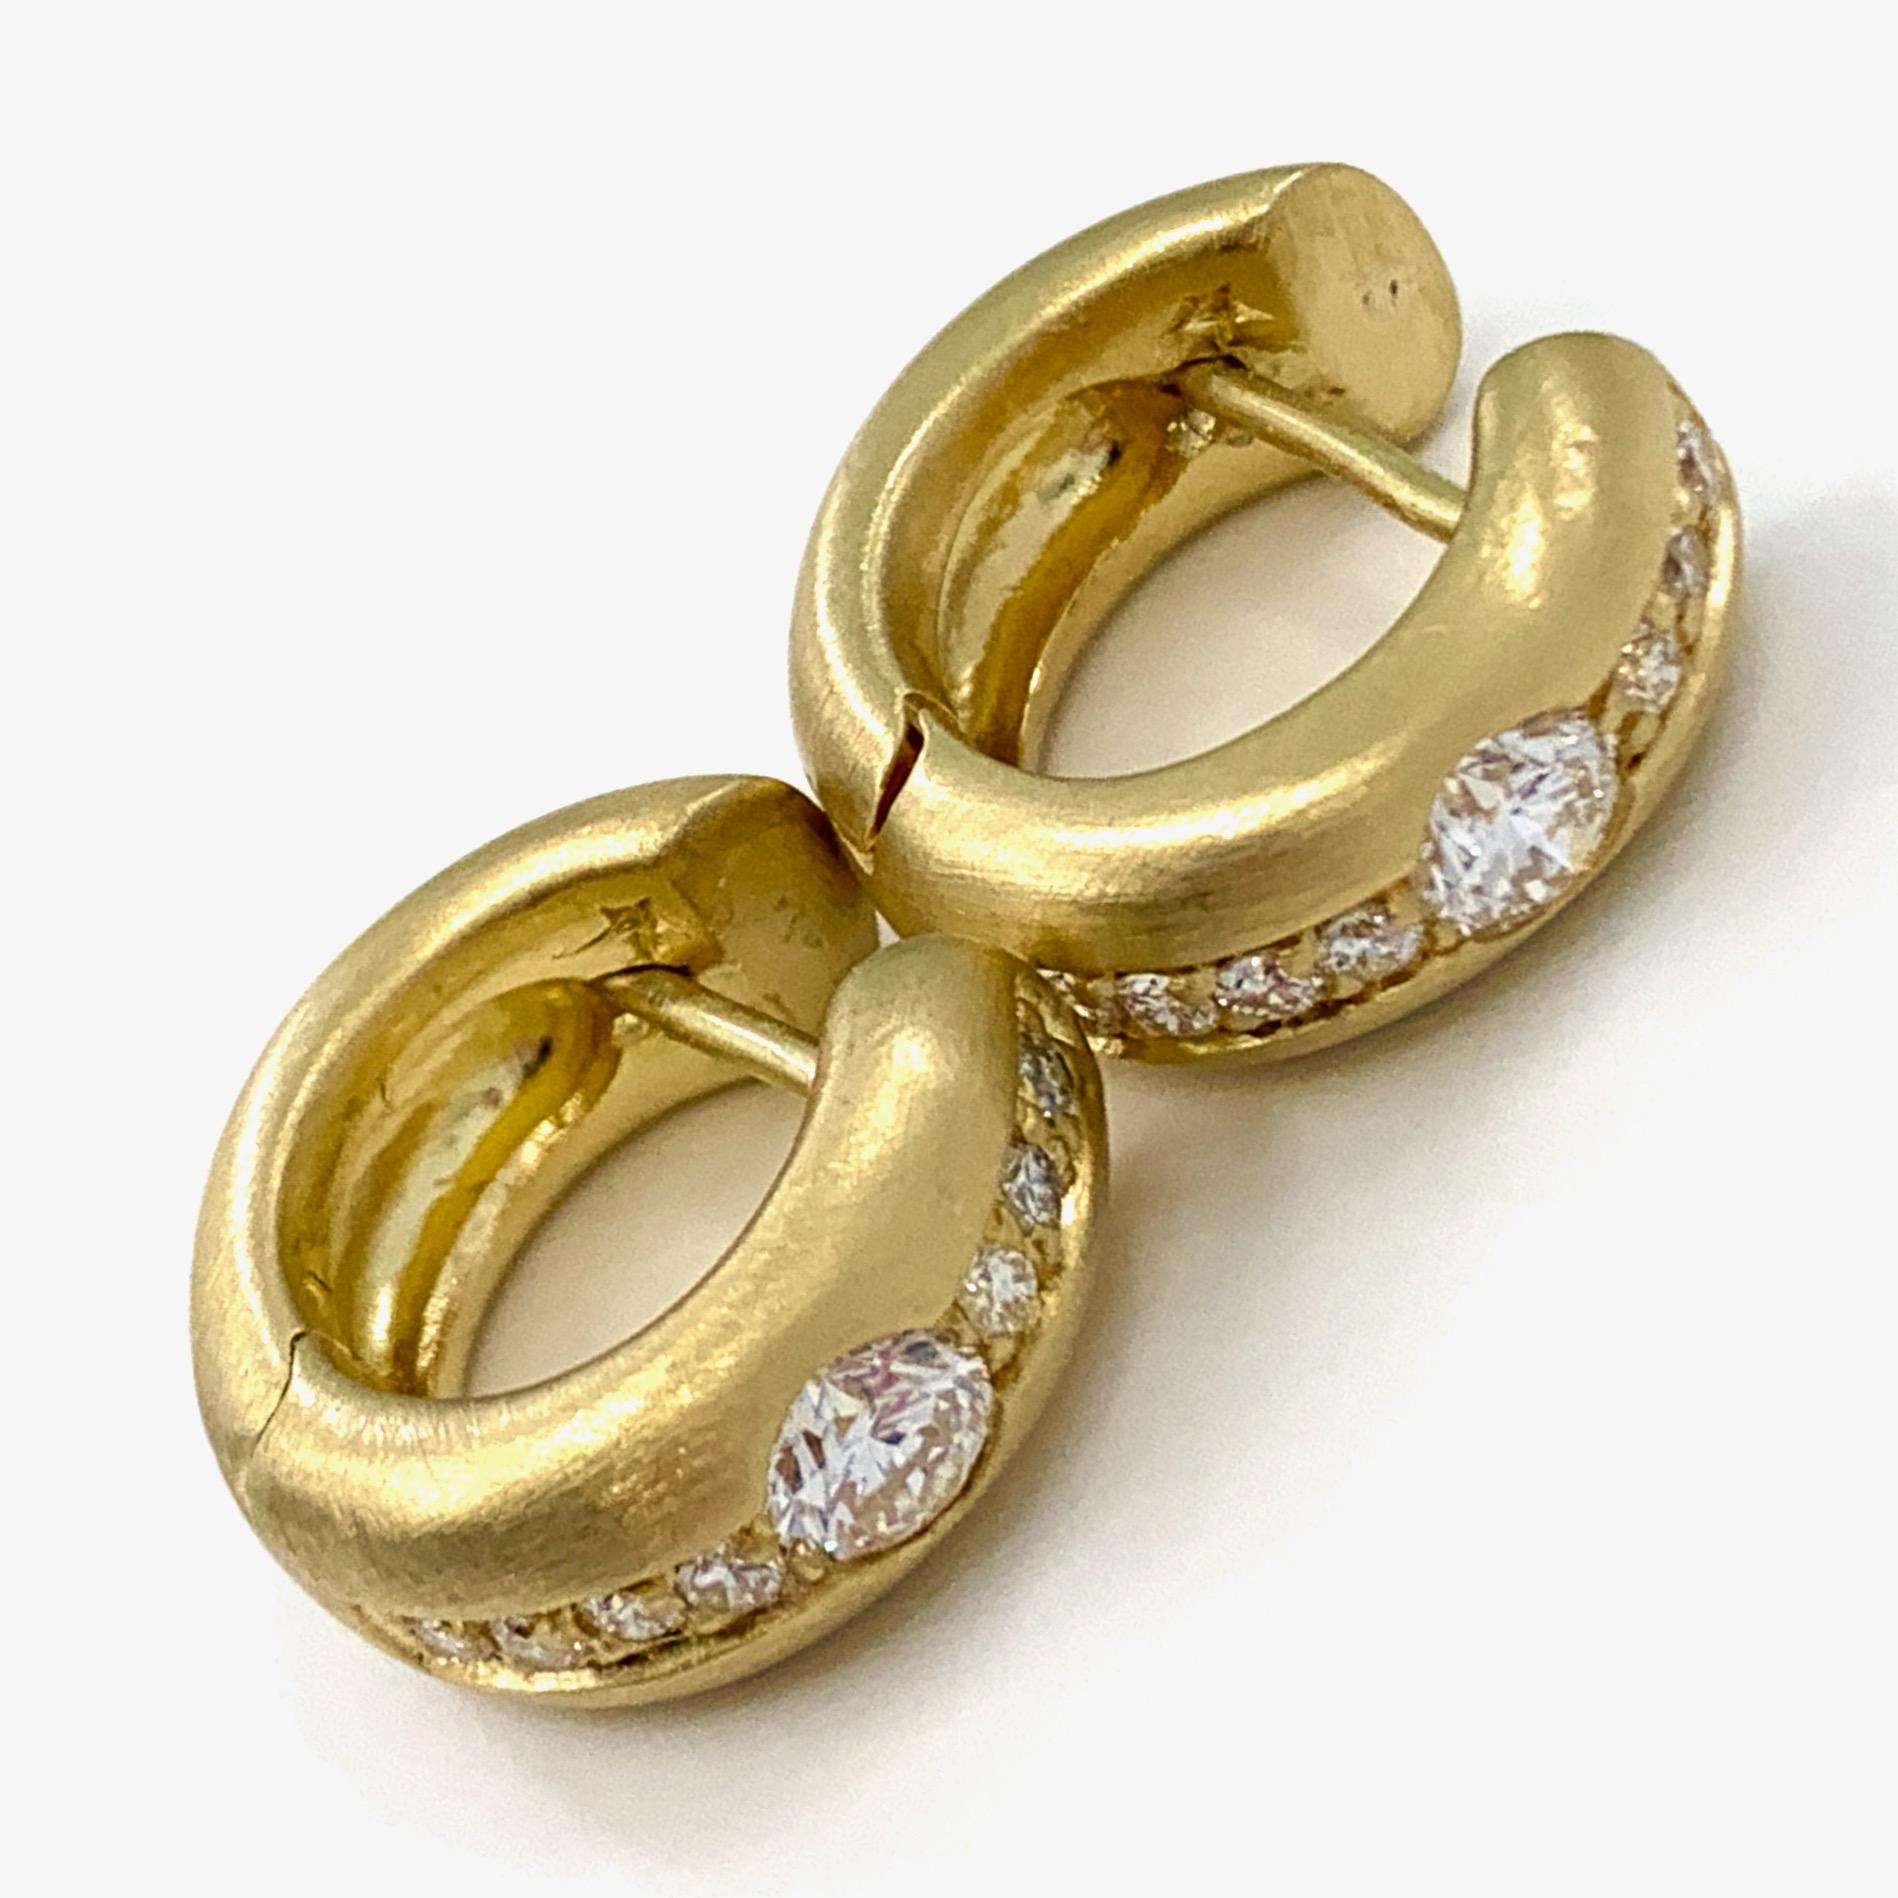 Brilliant Cut H. Stern 0.64 Carat Diamond Huggie Hoop Earrings in Brushed 18 Karat Yellow Gold